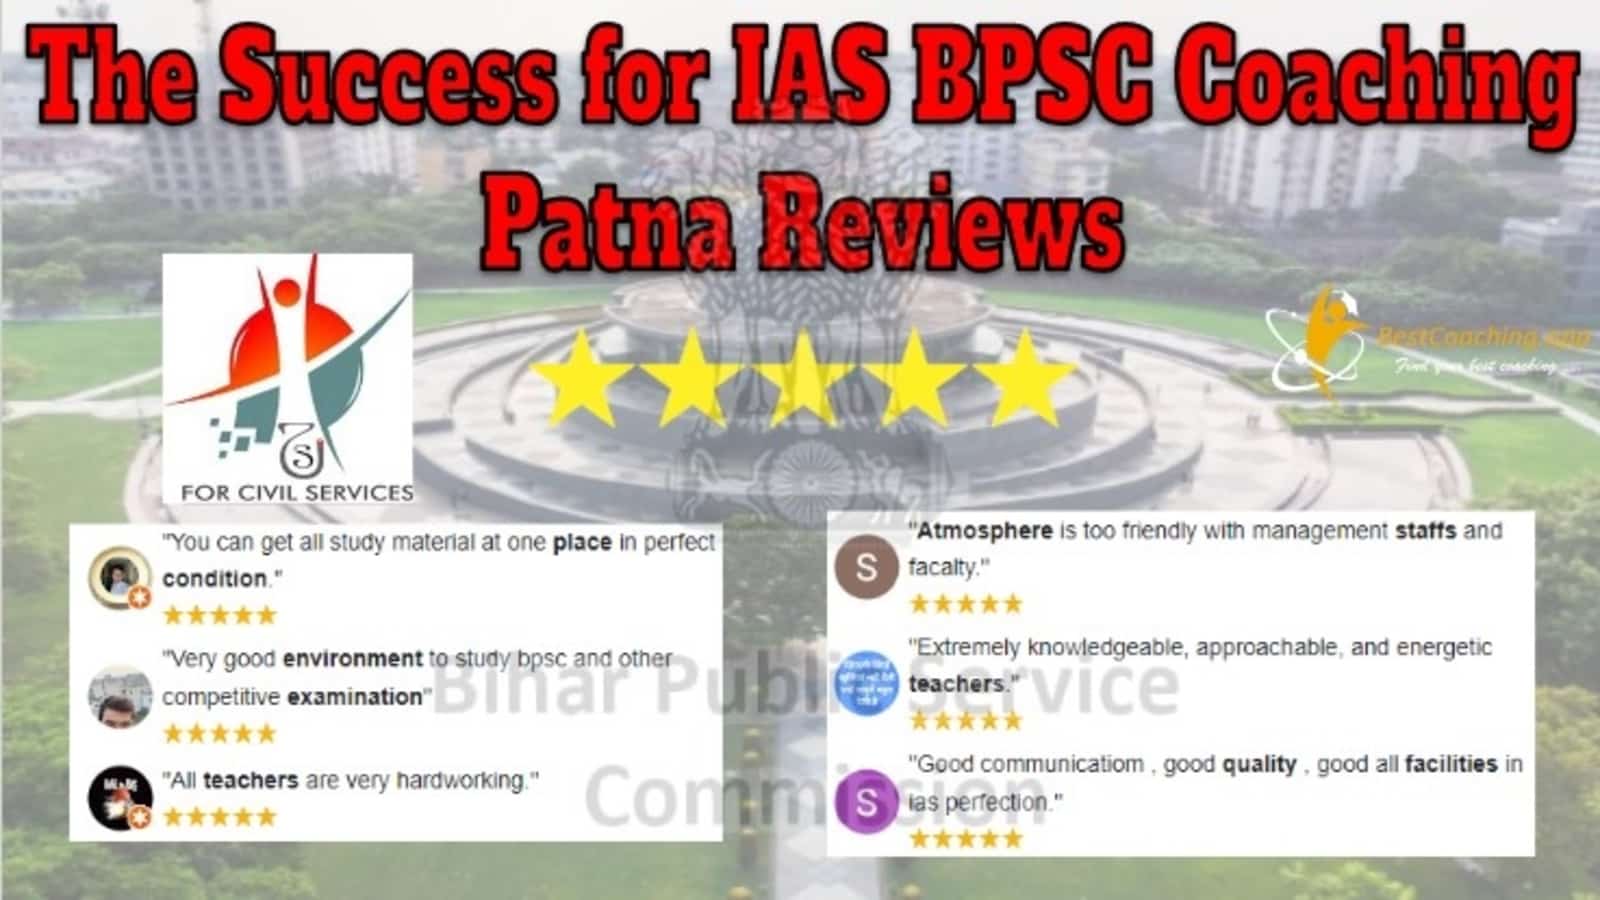 The Success for IAS BPSC Coaching Patna Reviews